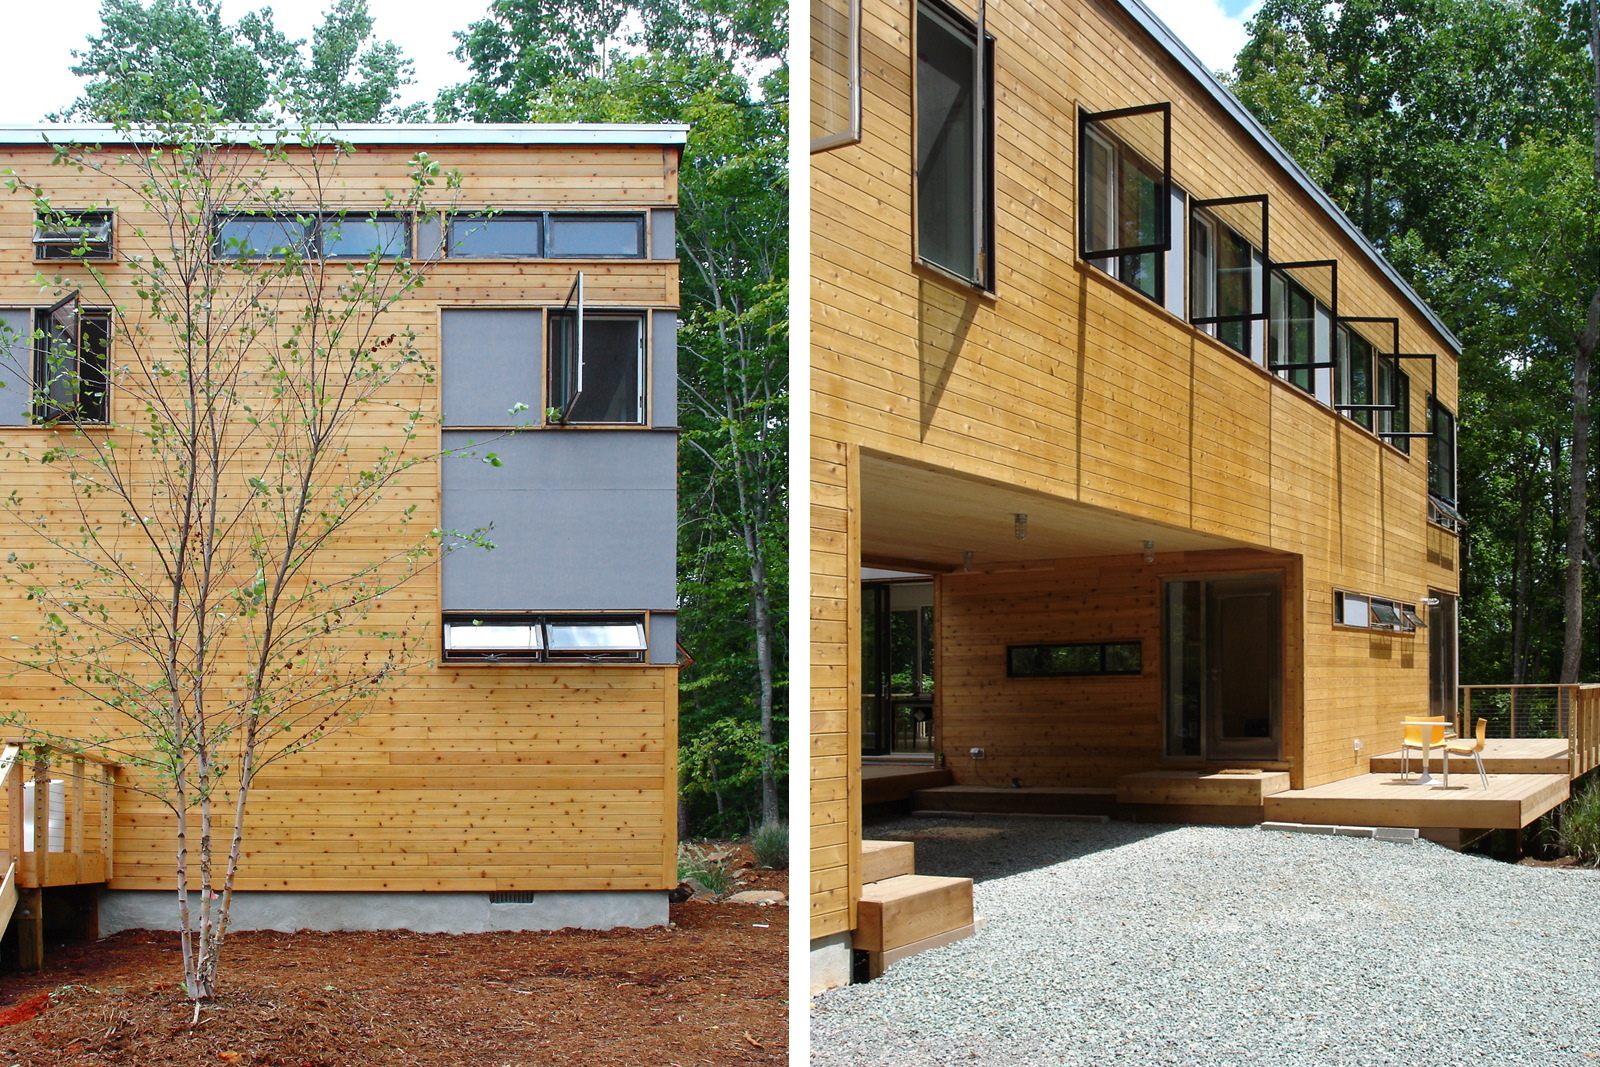 07-res4-resolution-4-architecture-modern-modular-house-prefab-dwell-home-exterior.jpg